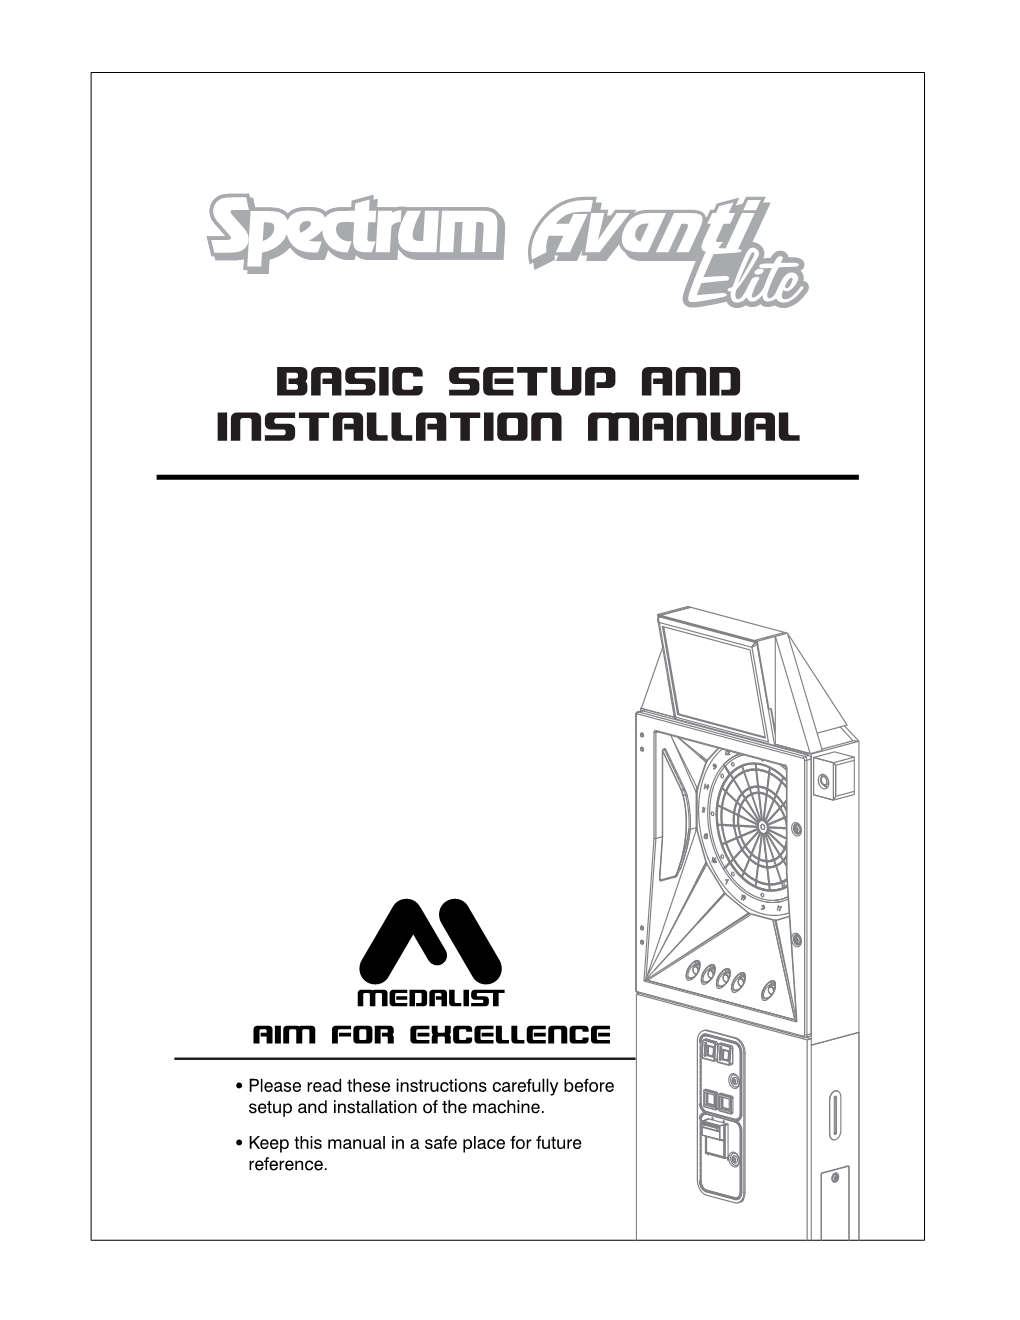 Spectrum Avanti Elite Service Manual